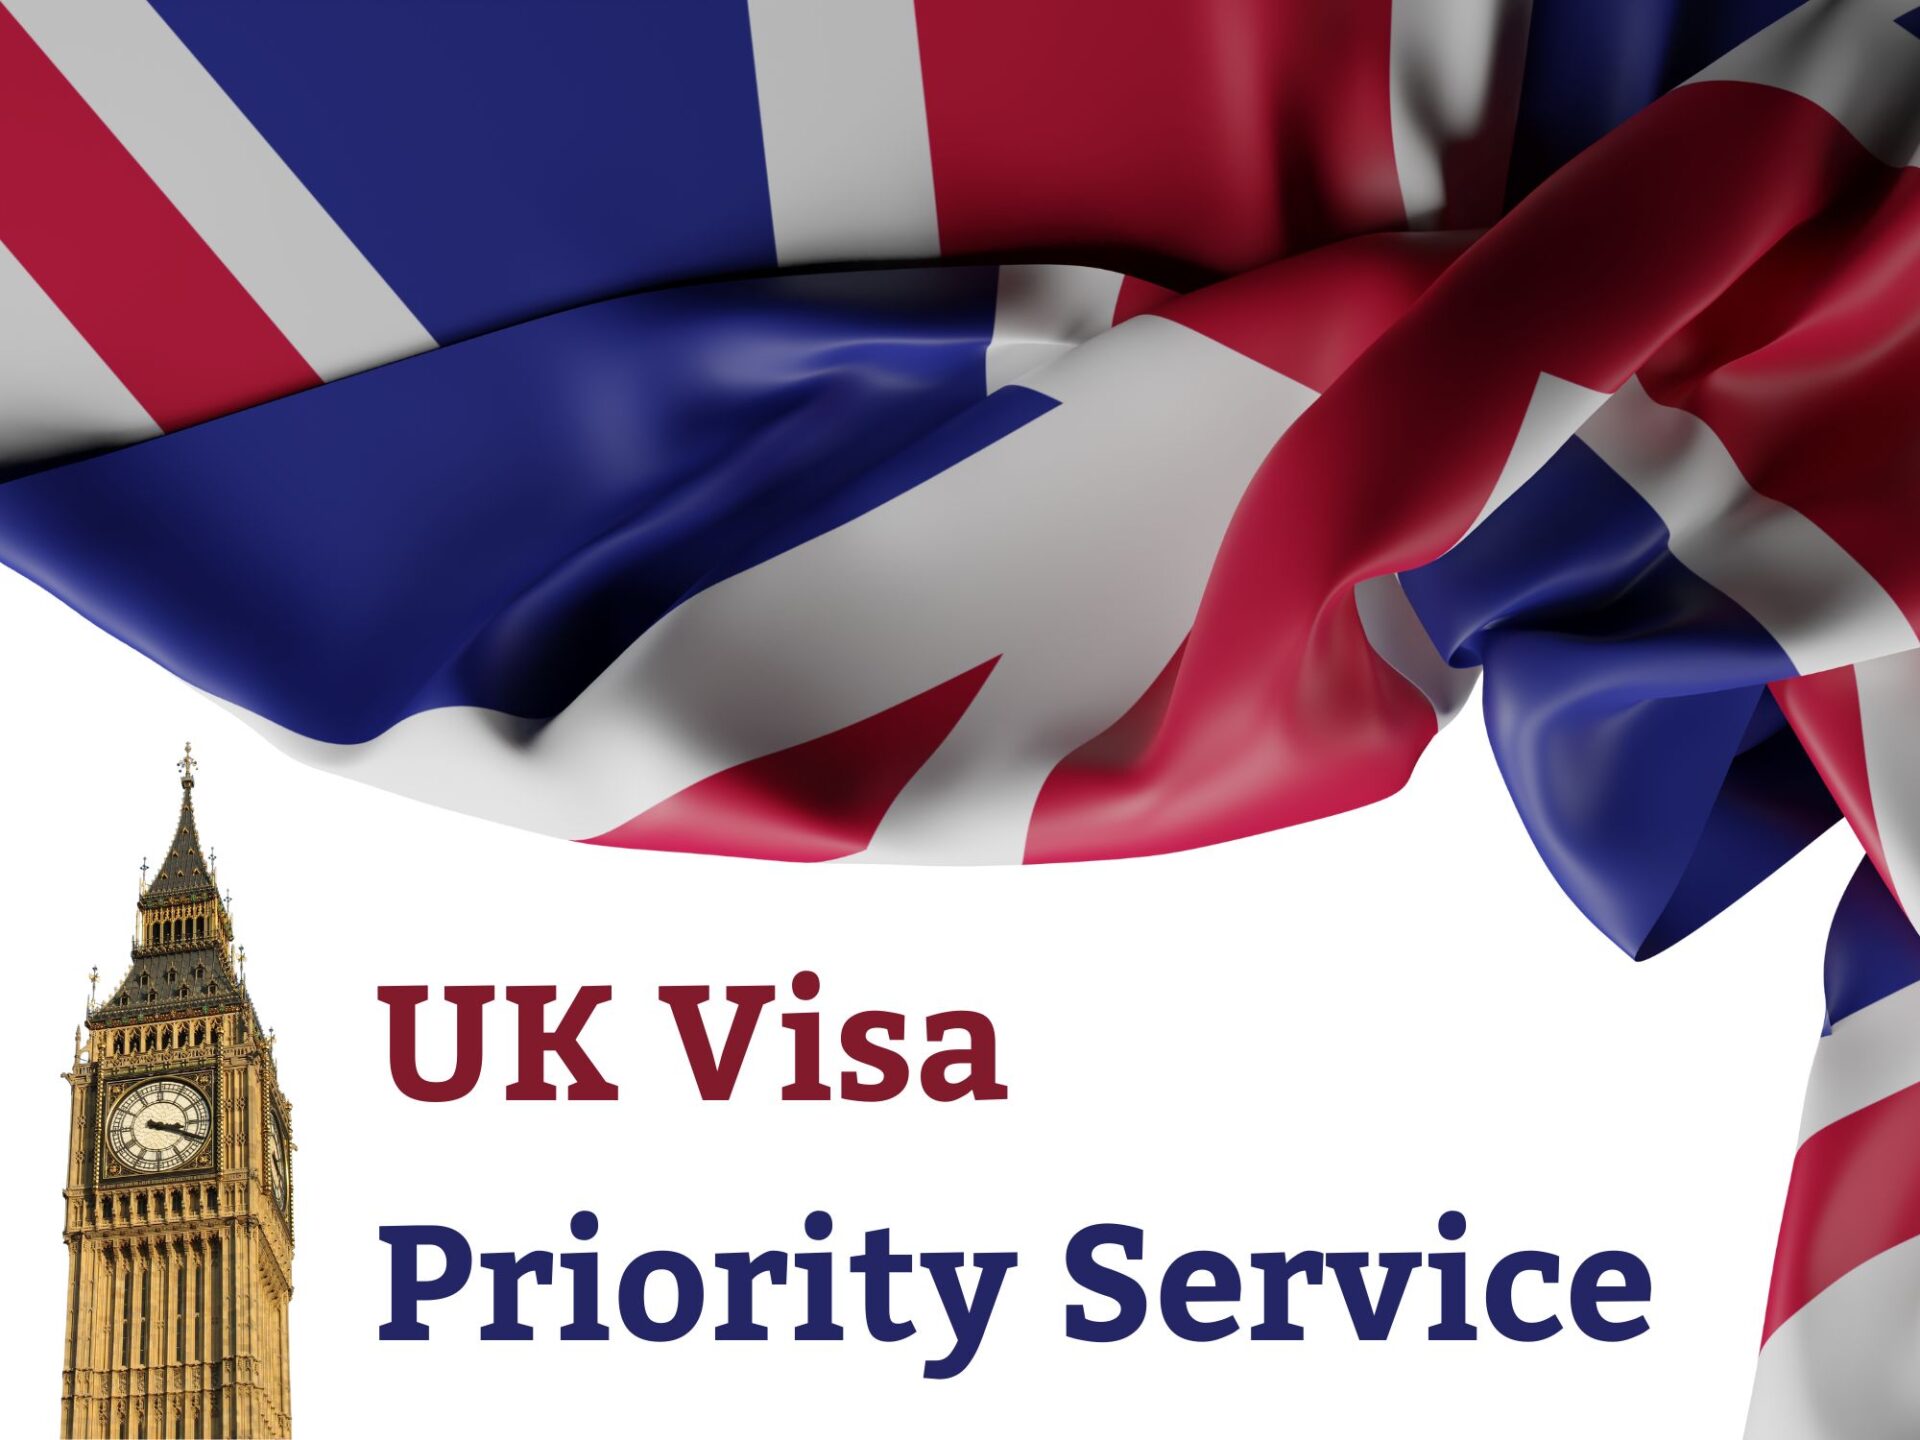 What is UK visa priority service